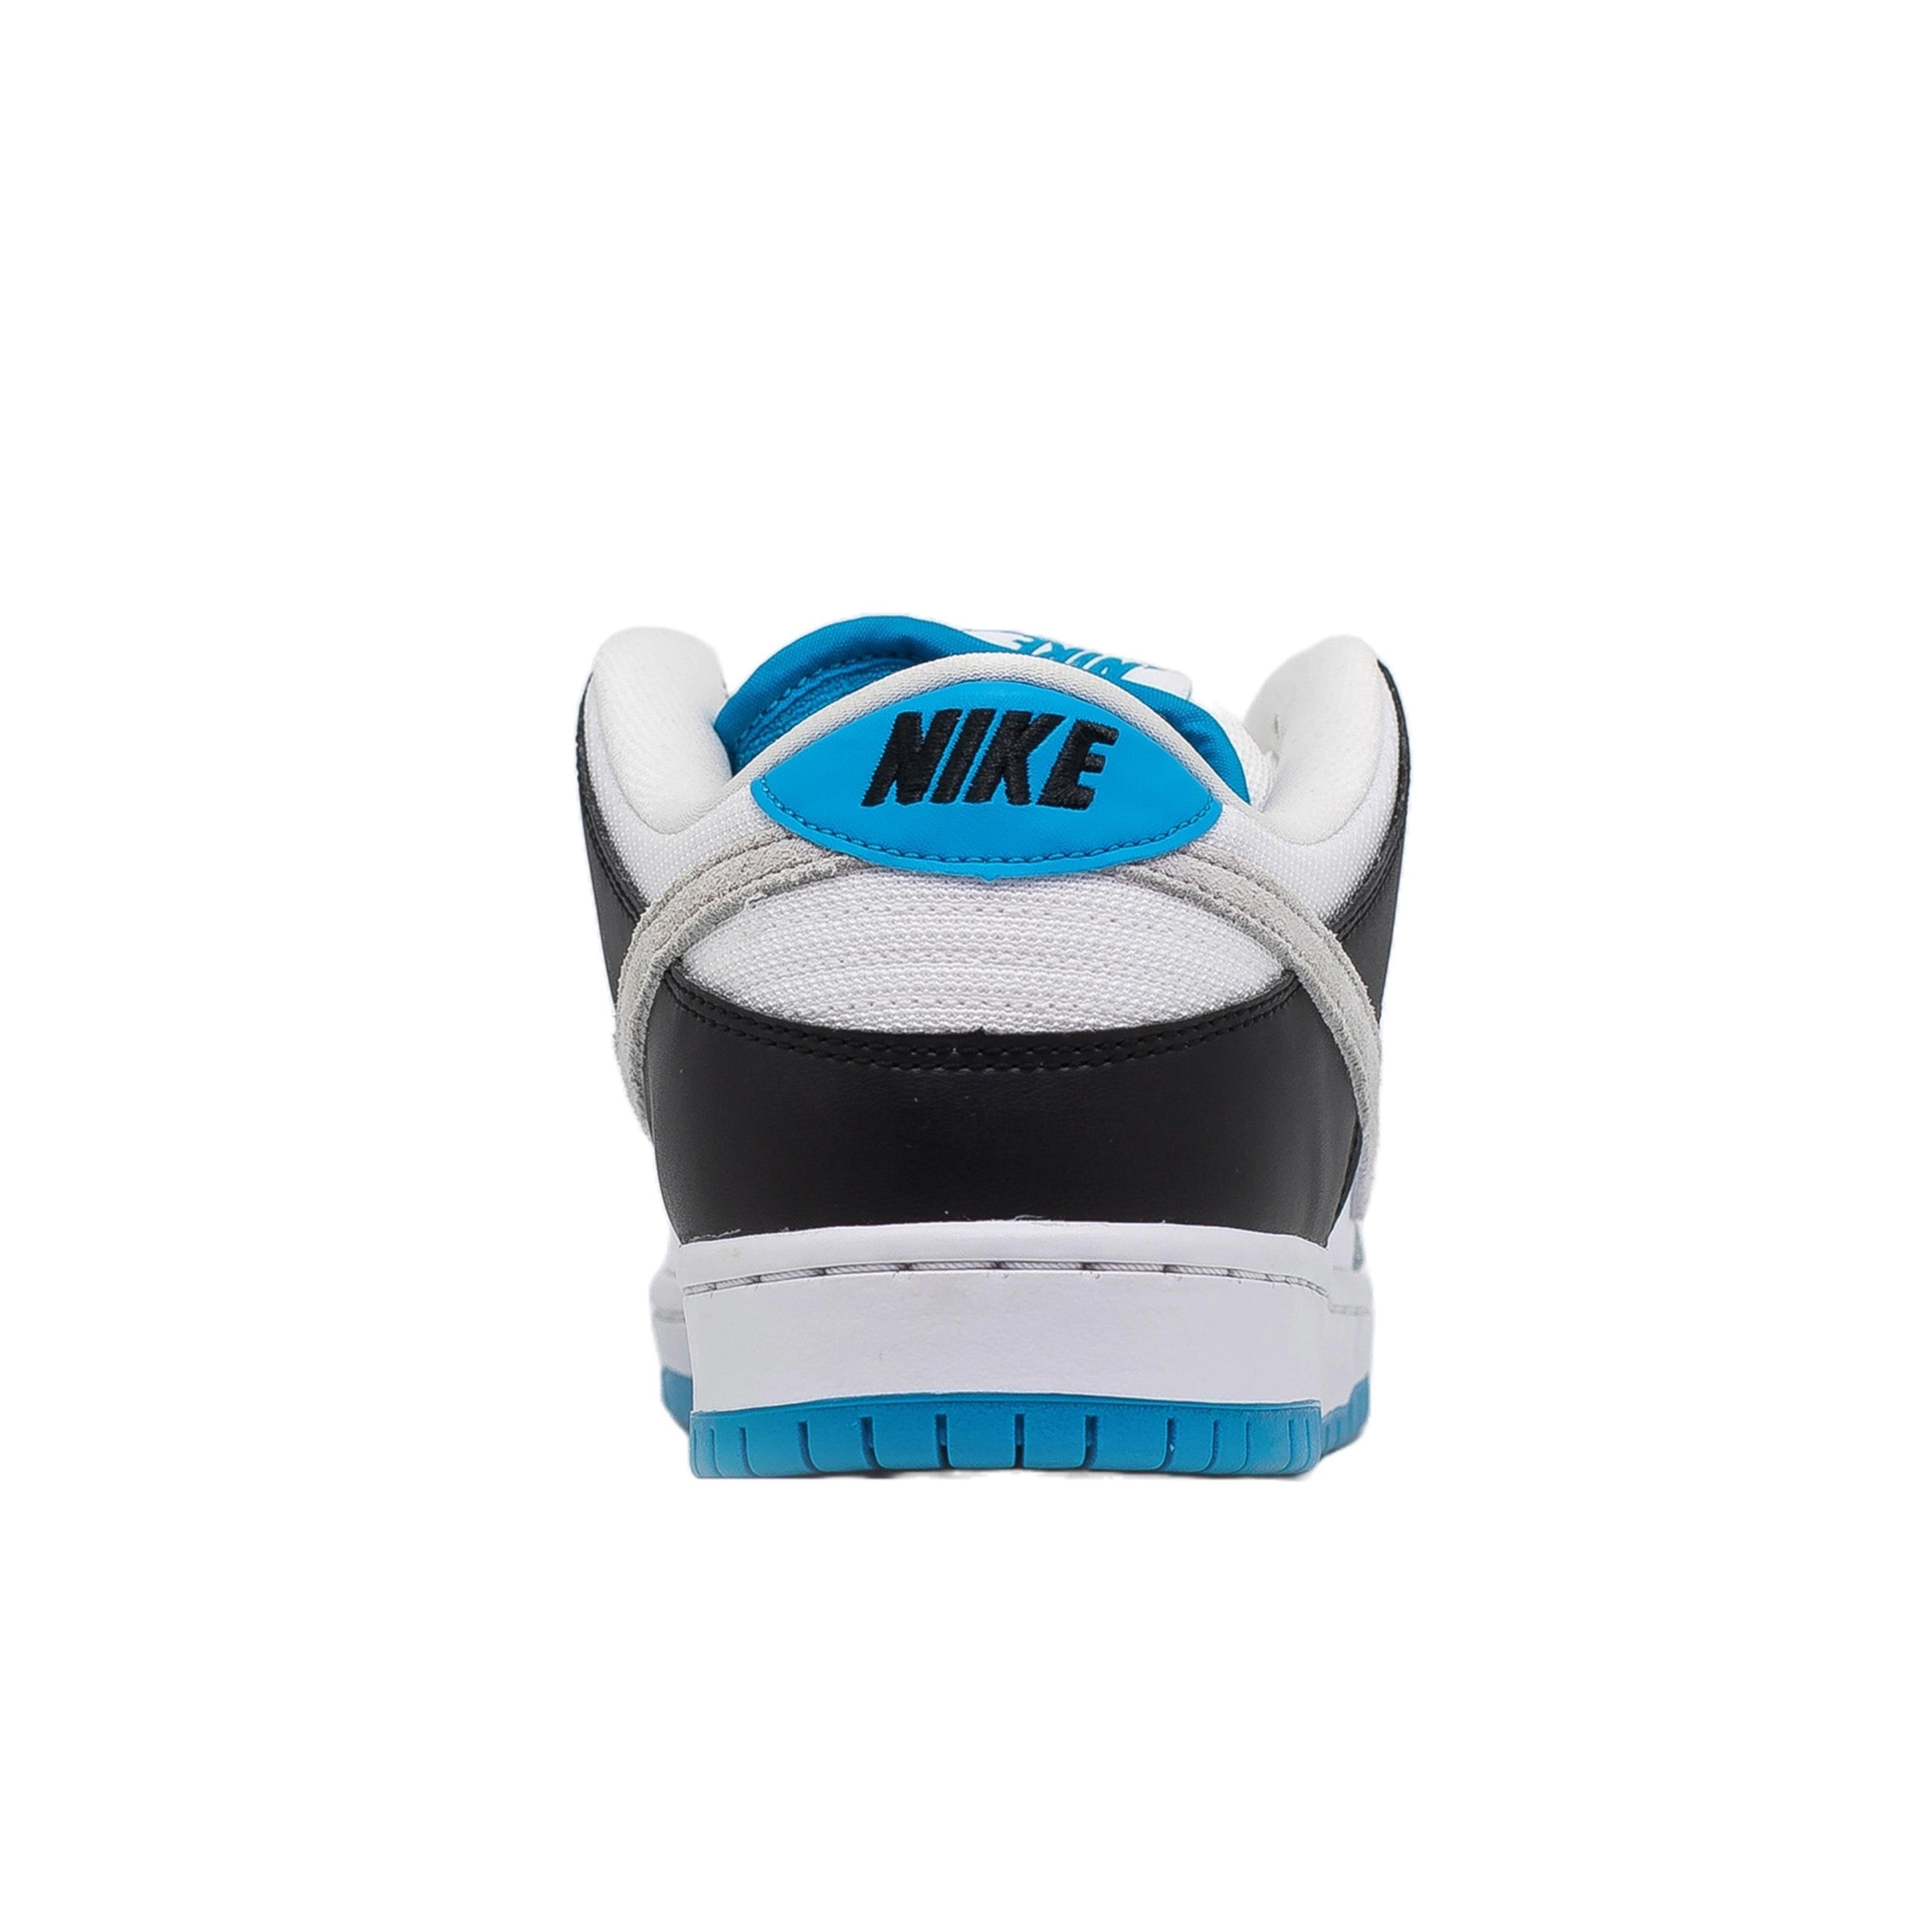 Alternate View 3 of Nike SB Dunk Low, Laser Blue